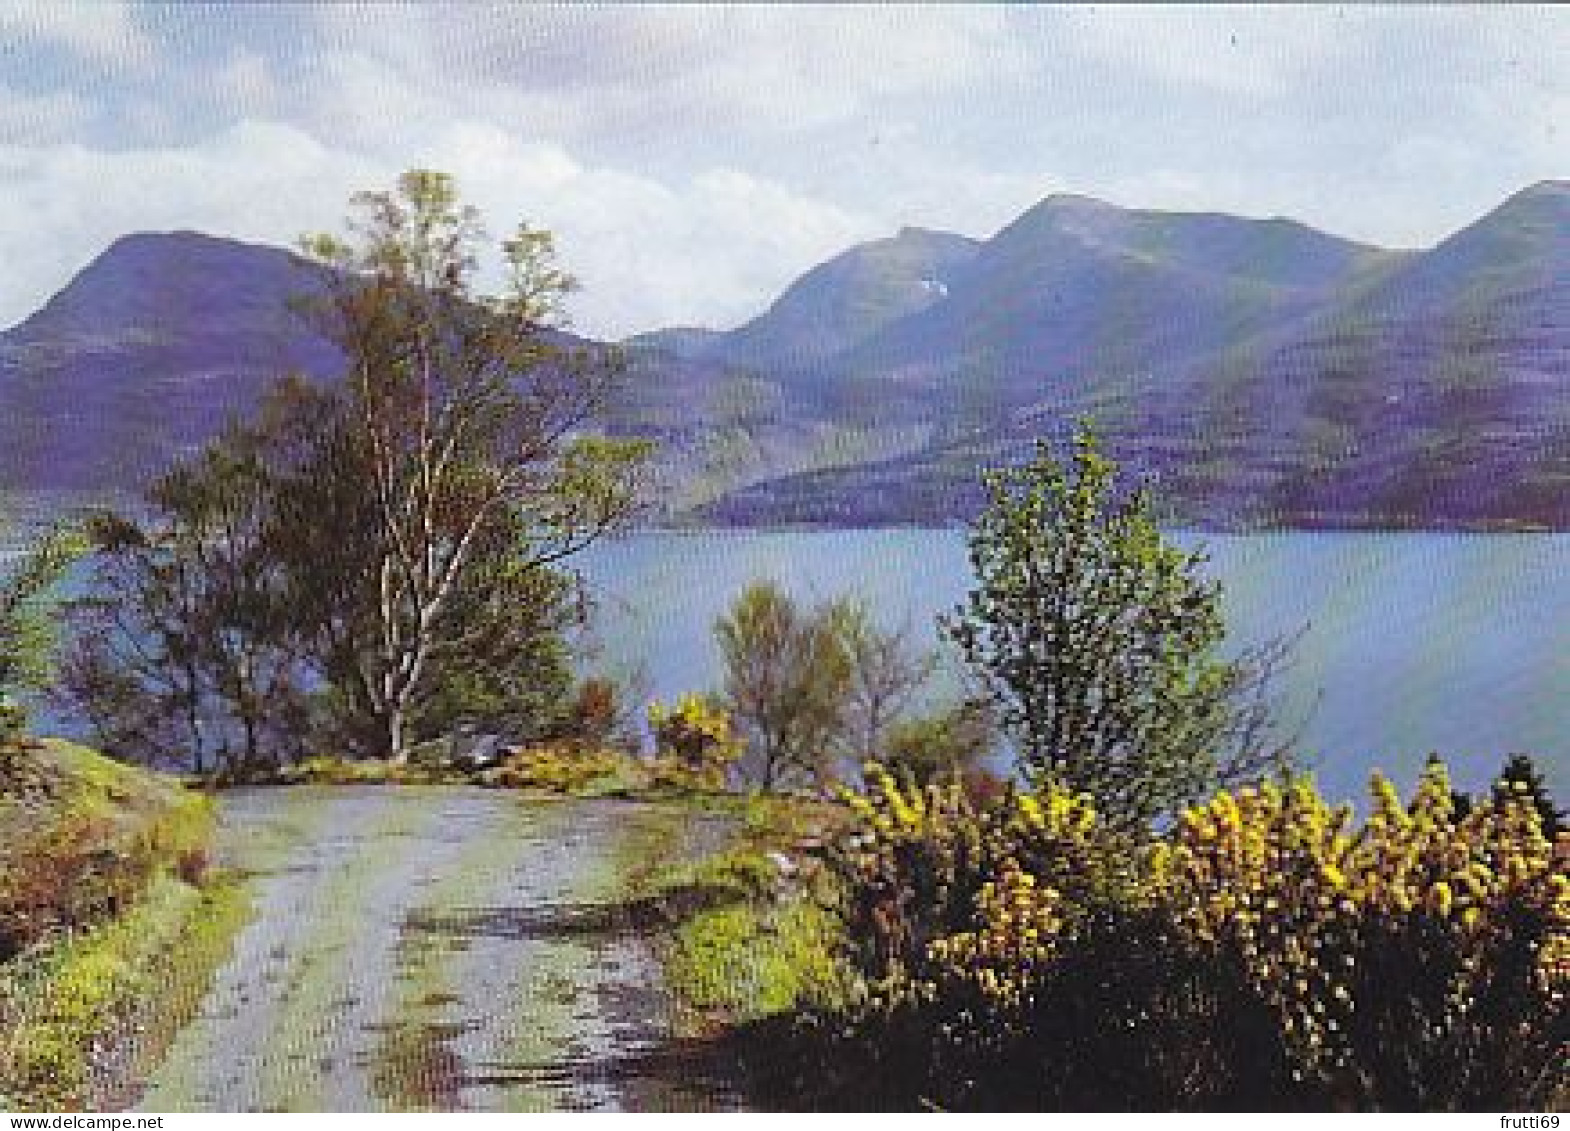 AK 173537 SCOTLAND - Loch Torridon From The Alligin Road - Ross-shire - Ross & Cromarty